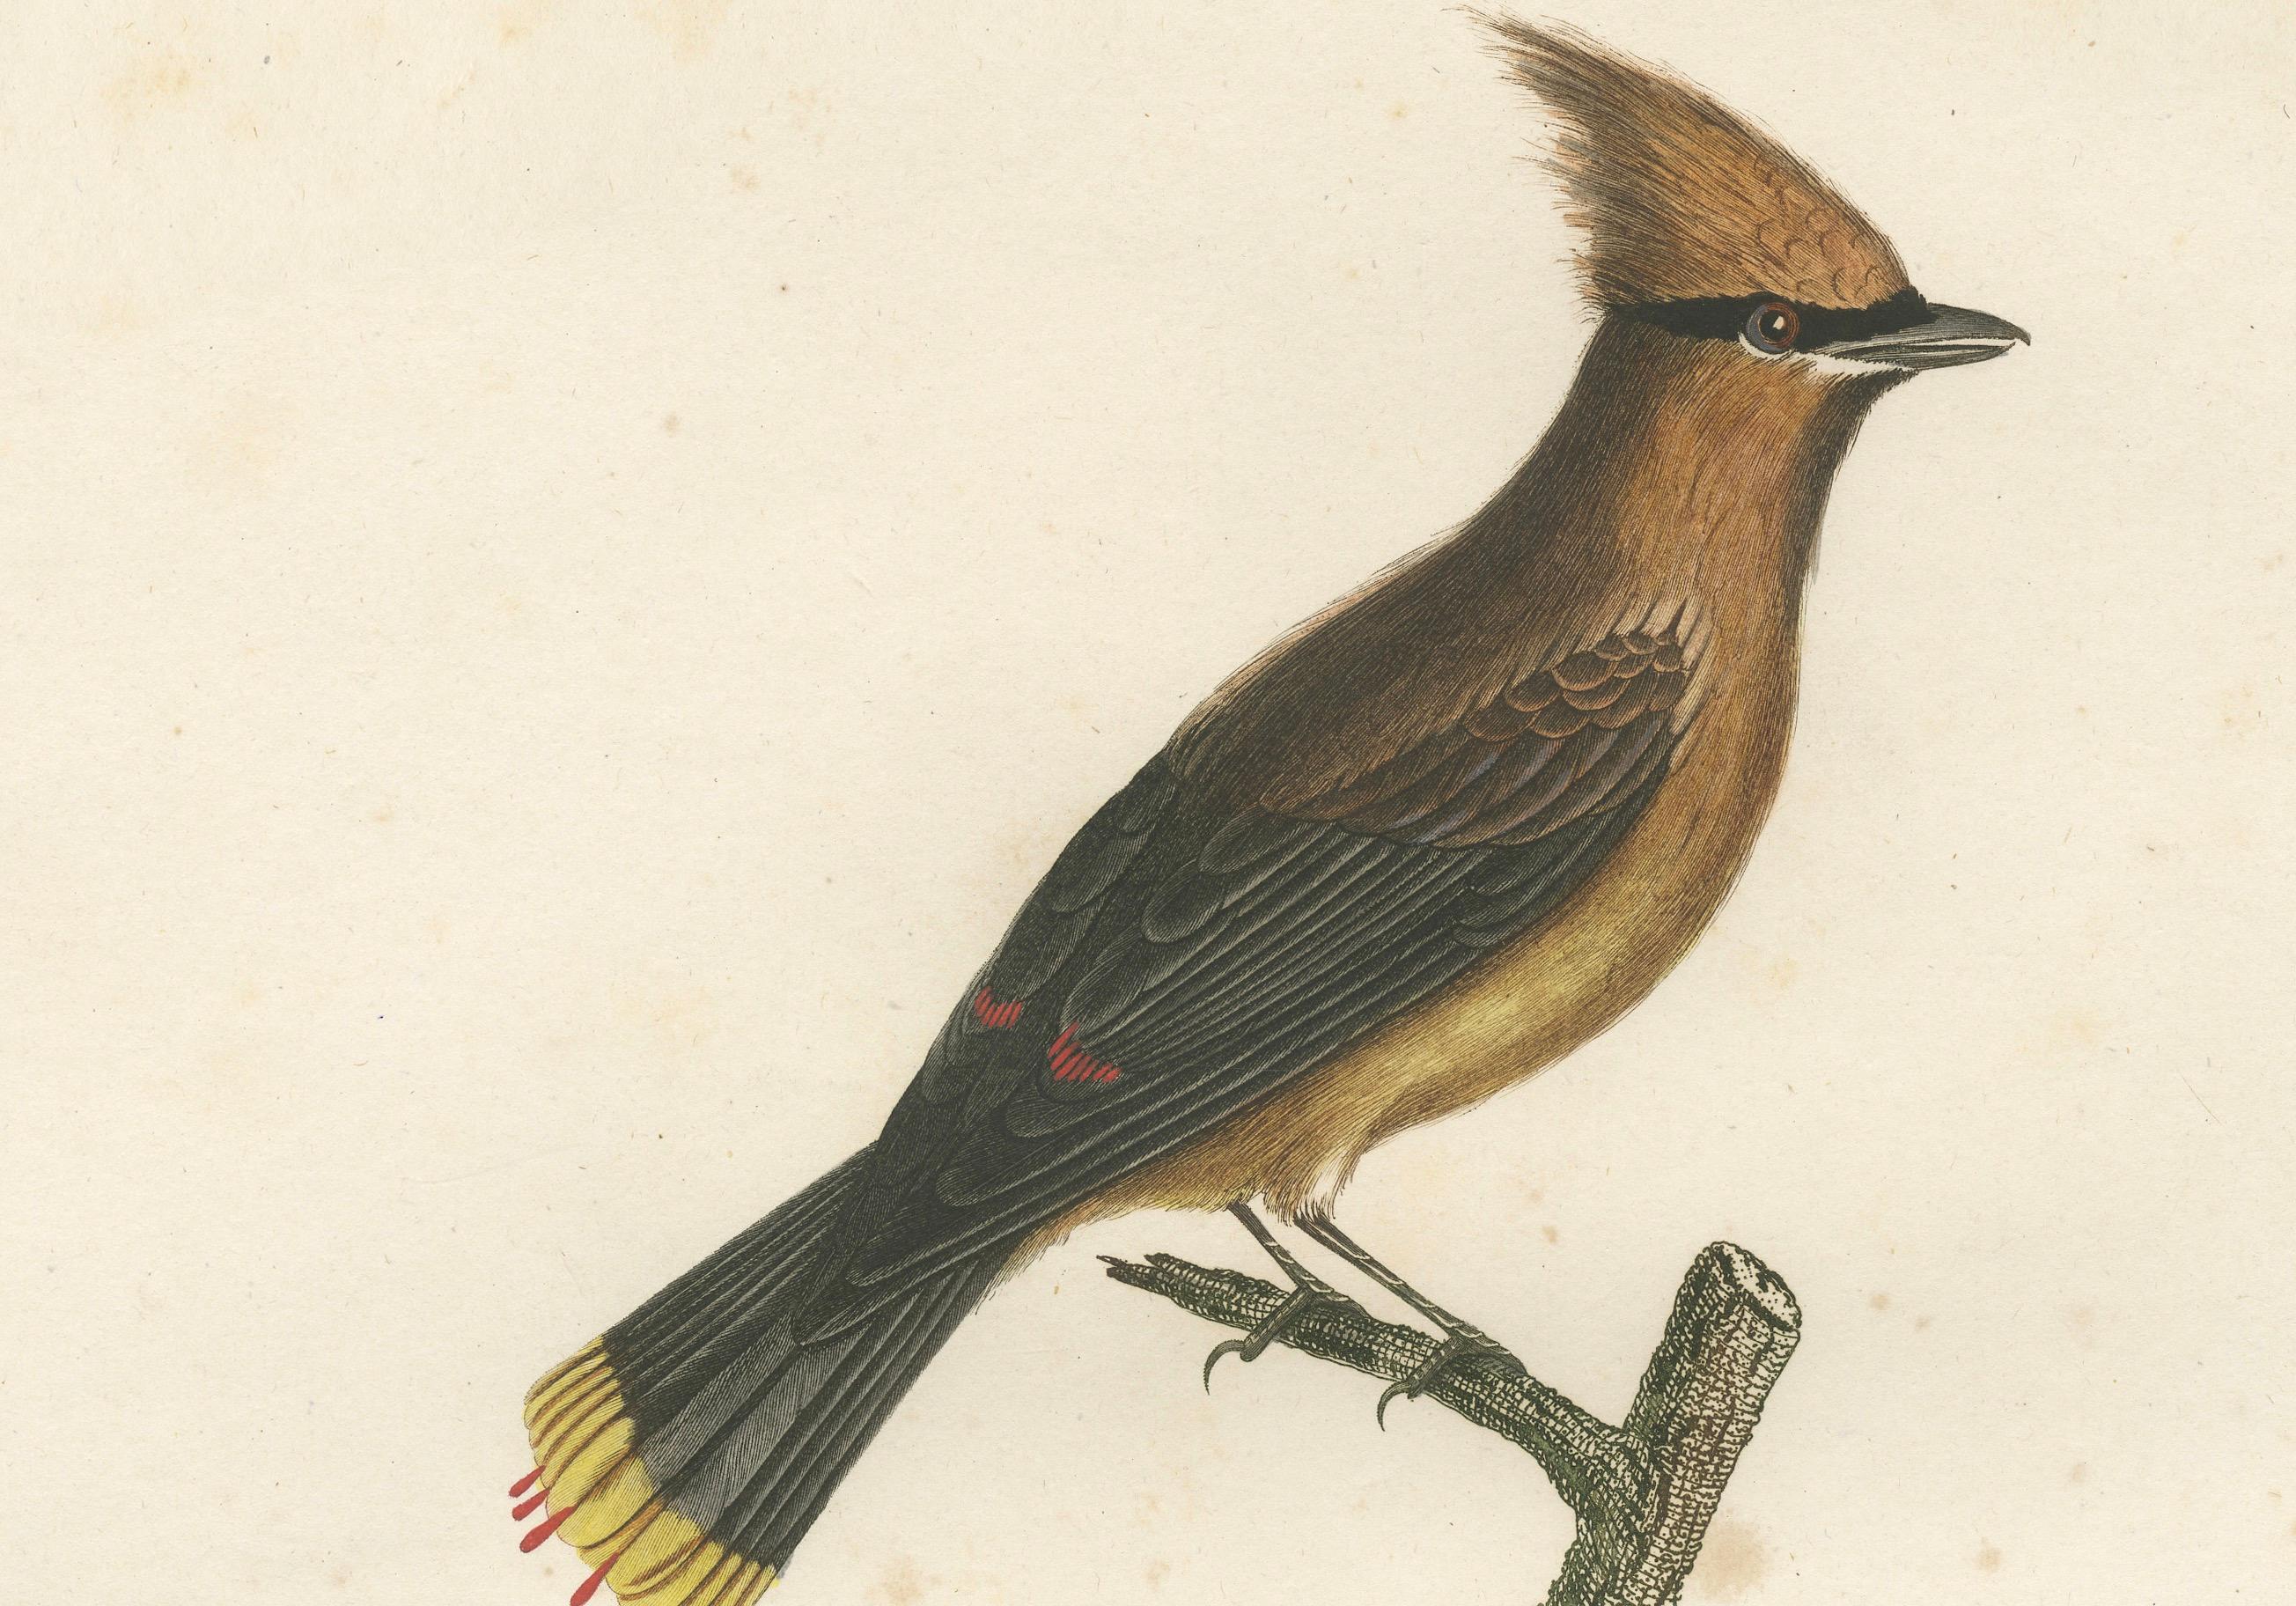 Paper 1807 Cedar Waxwing Print - Original Handcolored Bird Illustration by Vieillot For Sale